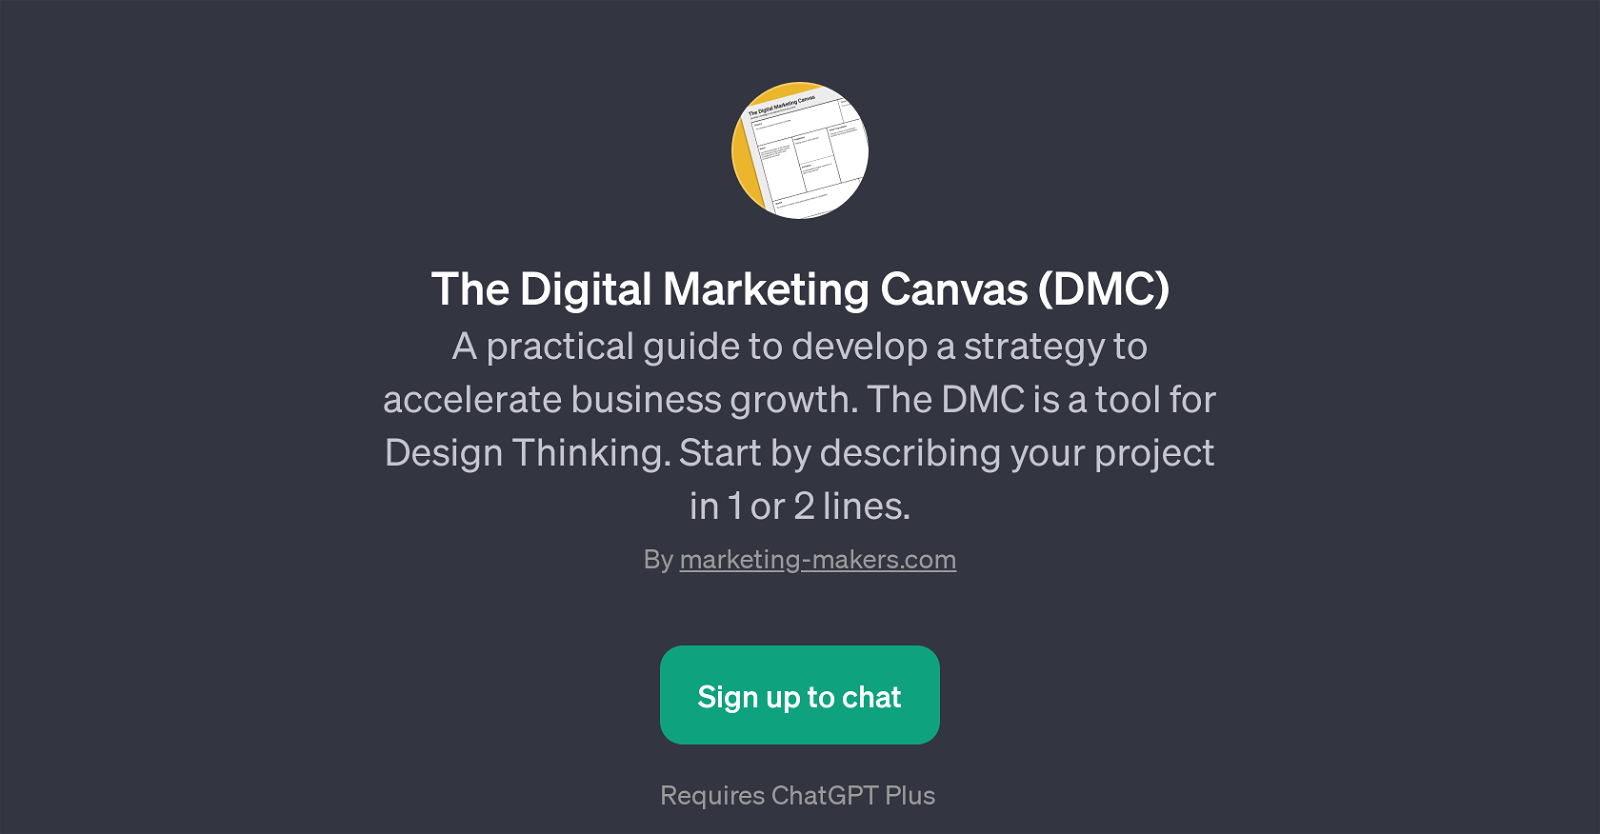 The Digital Marketing Canvas (DMC) website